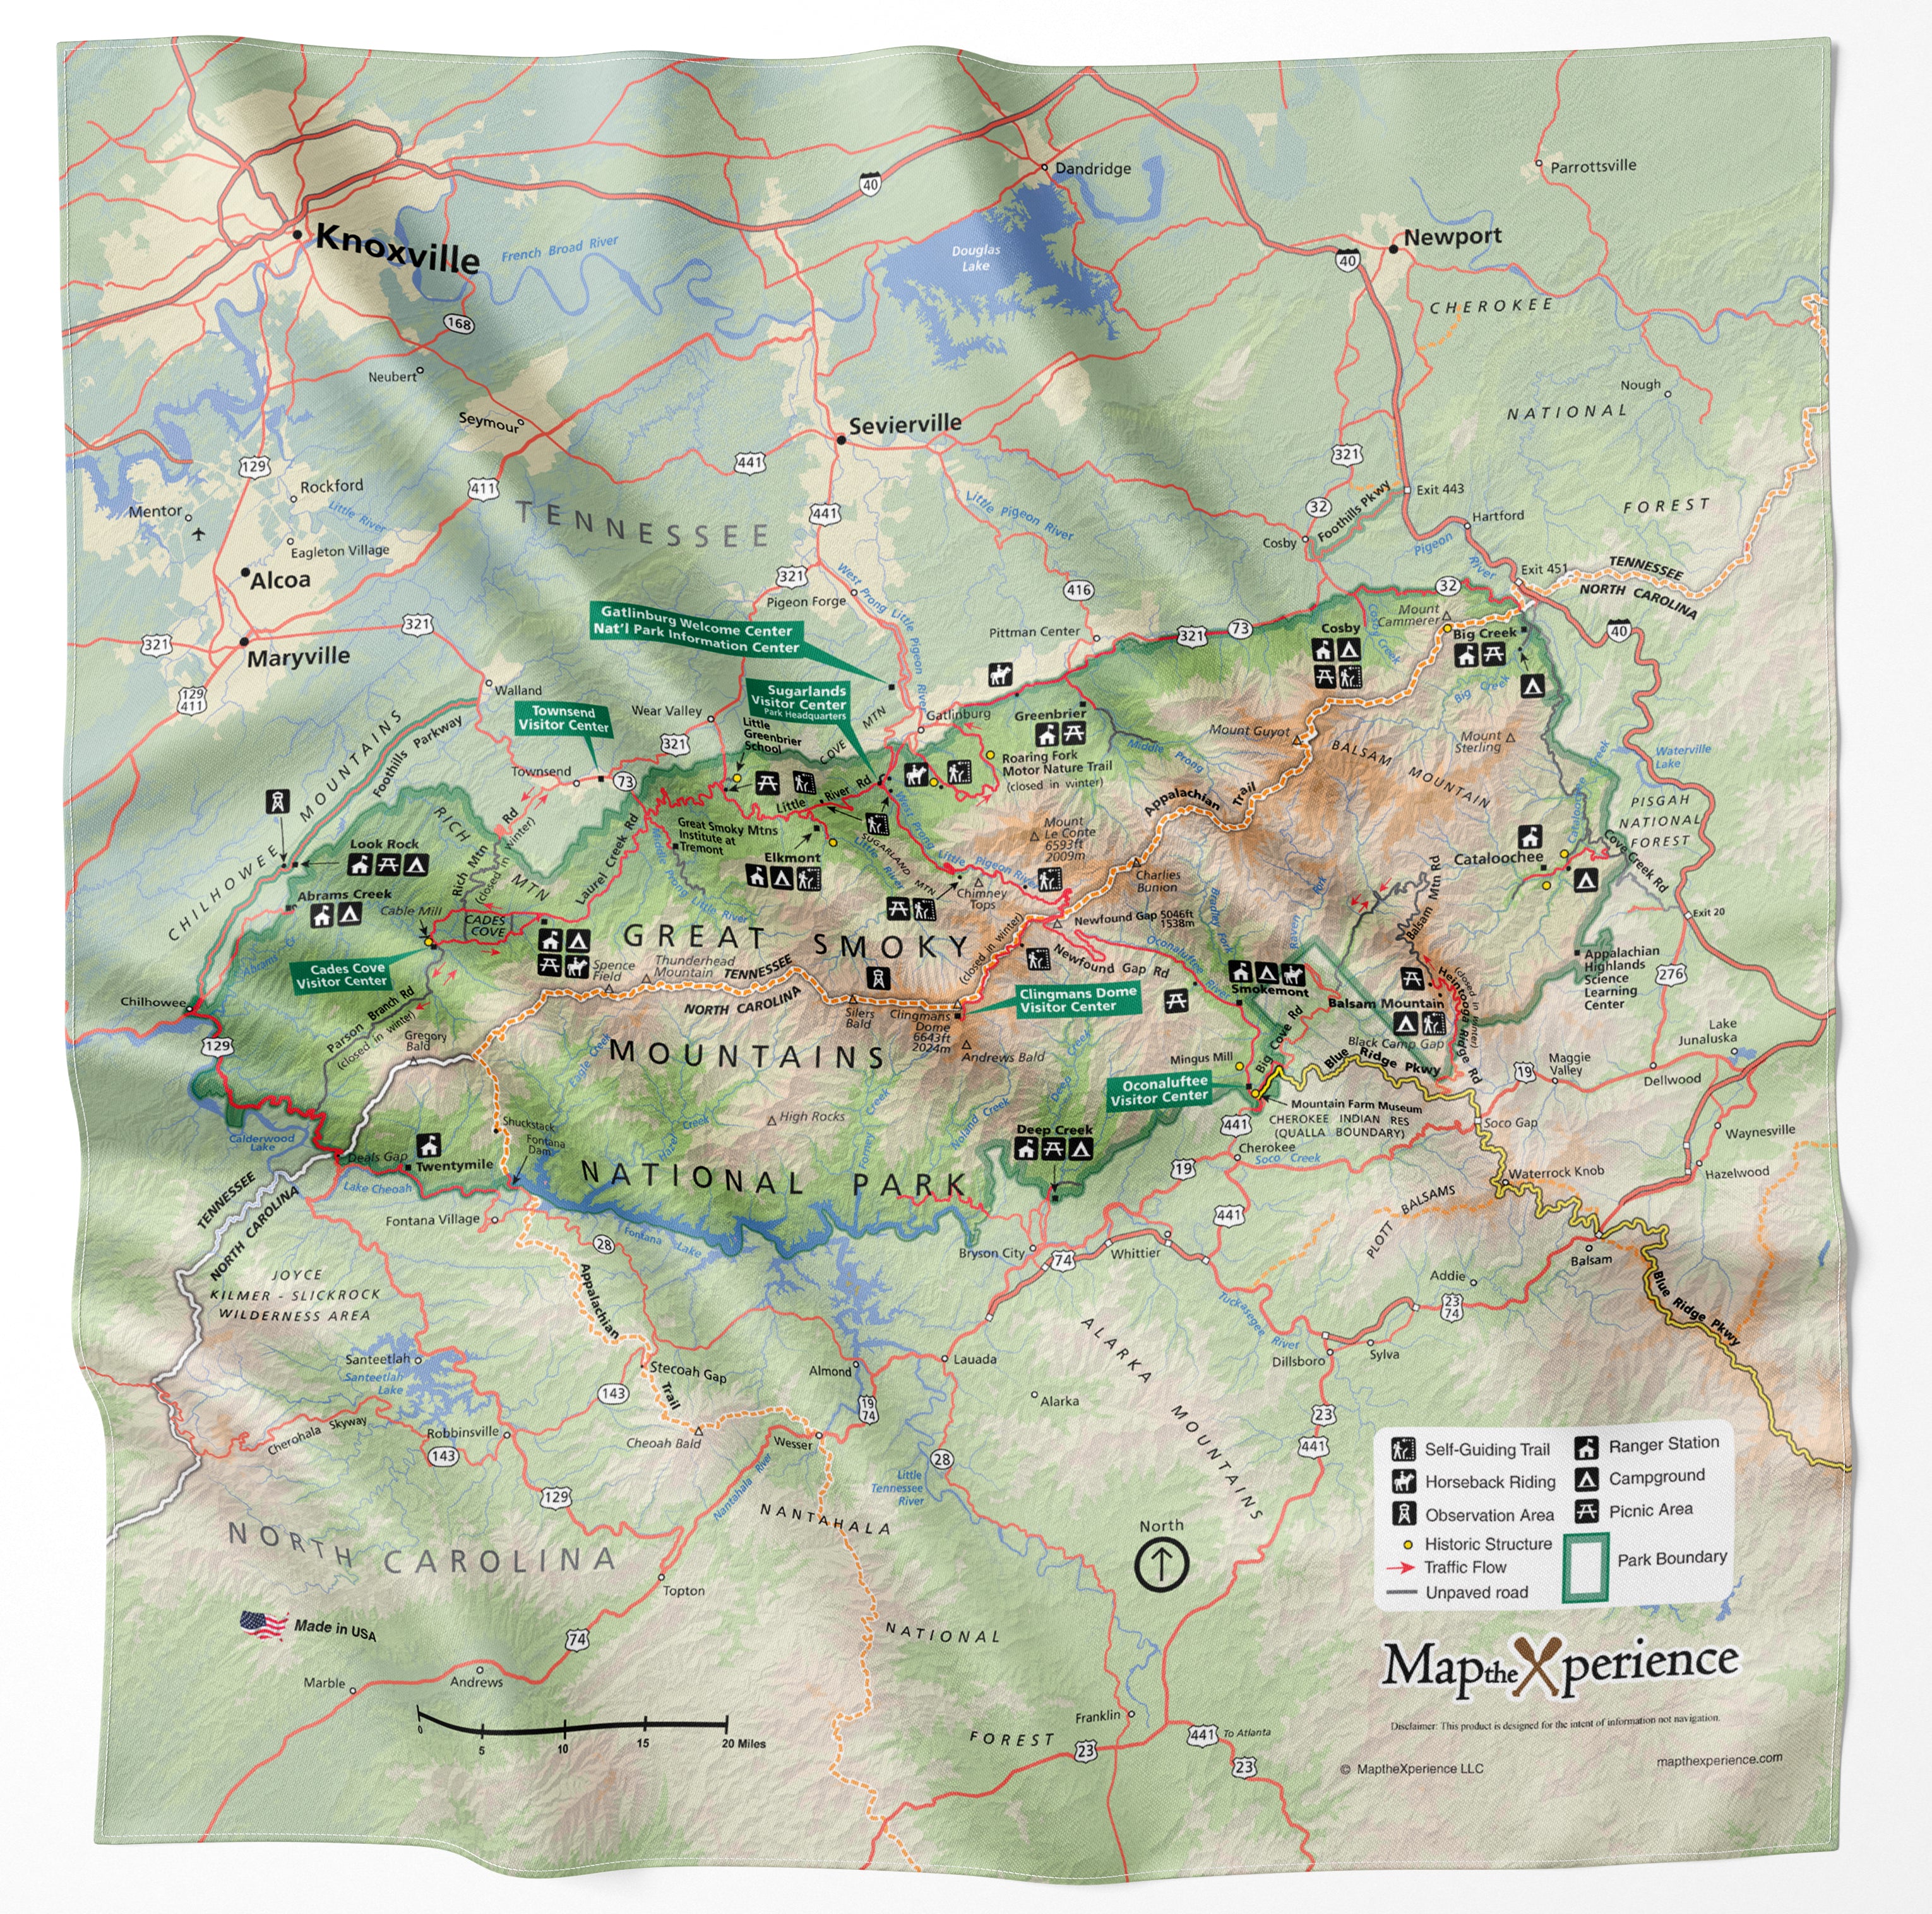 Great Smoky Mountains National Park Handy Map Microfiber Bandana